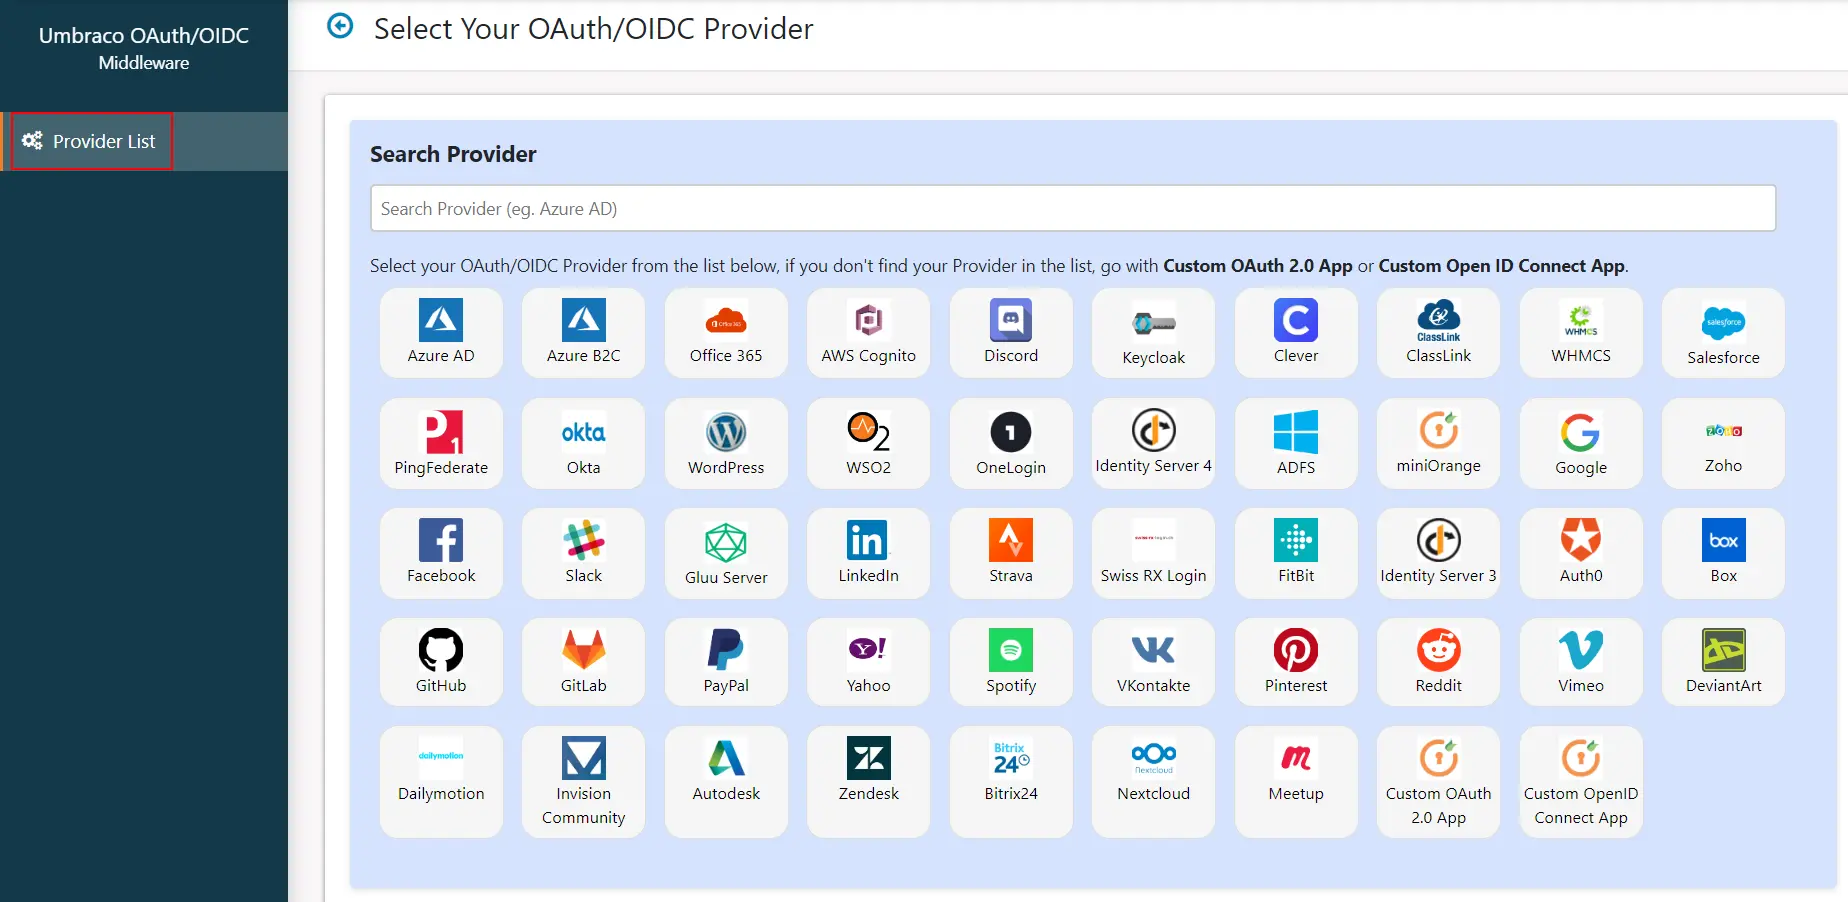 Umbraco OAuth/OIDC Single Sign-On (SSO) using AzureAD B2C as IDP (OAuth Provider) - Choose AzureAD B2C as authentication provider